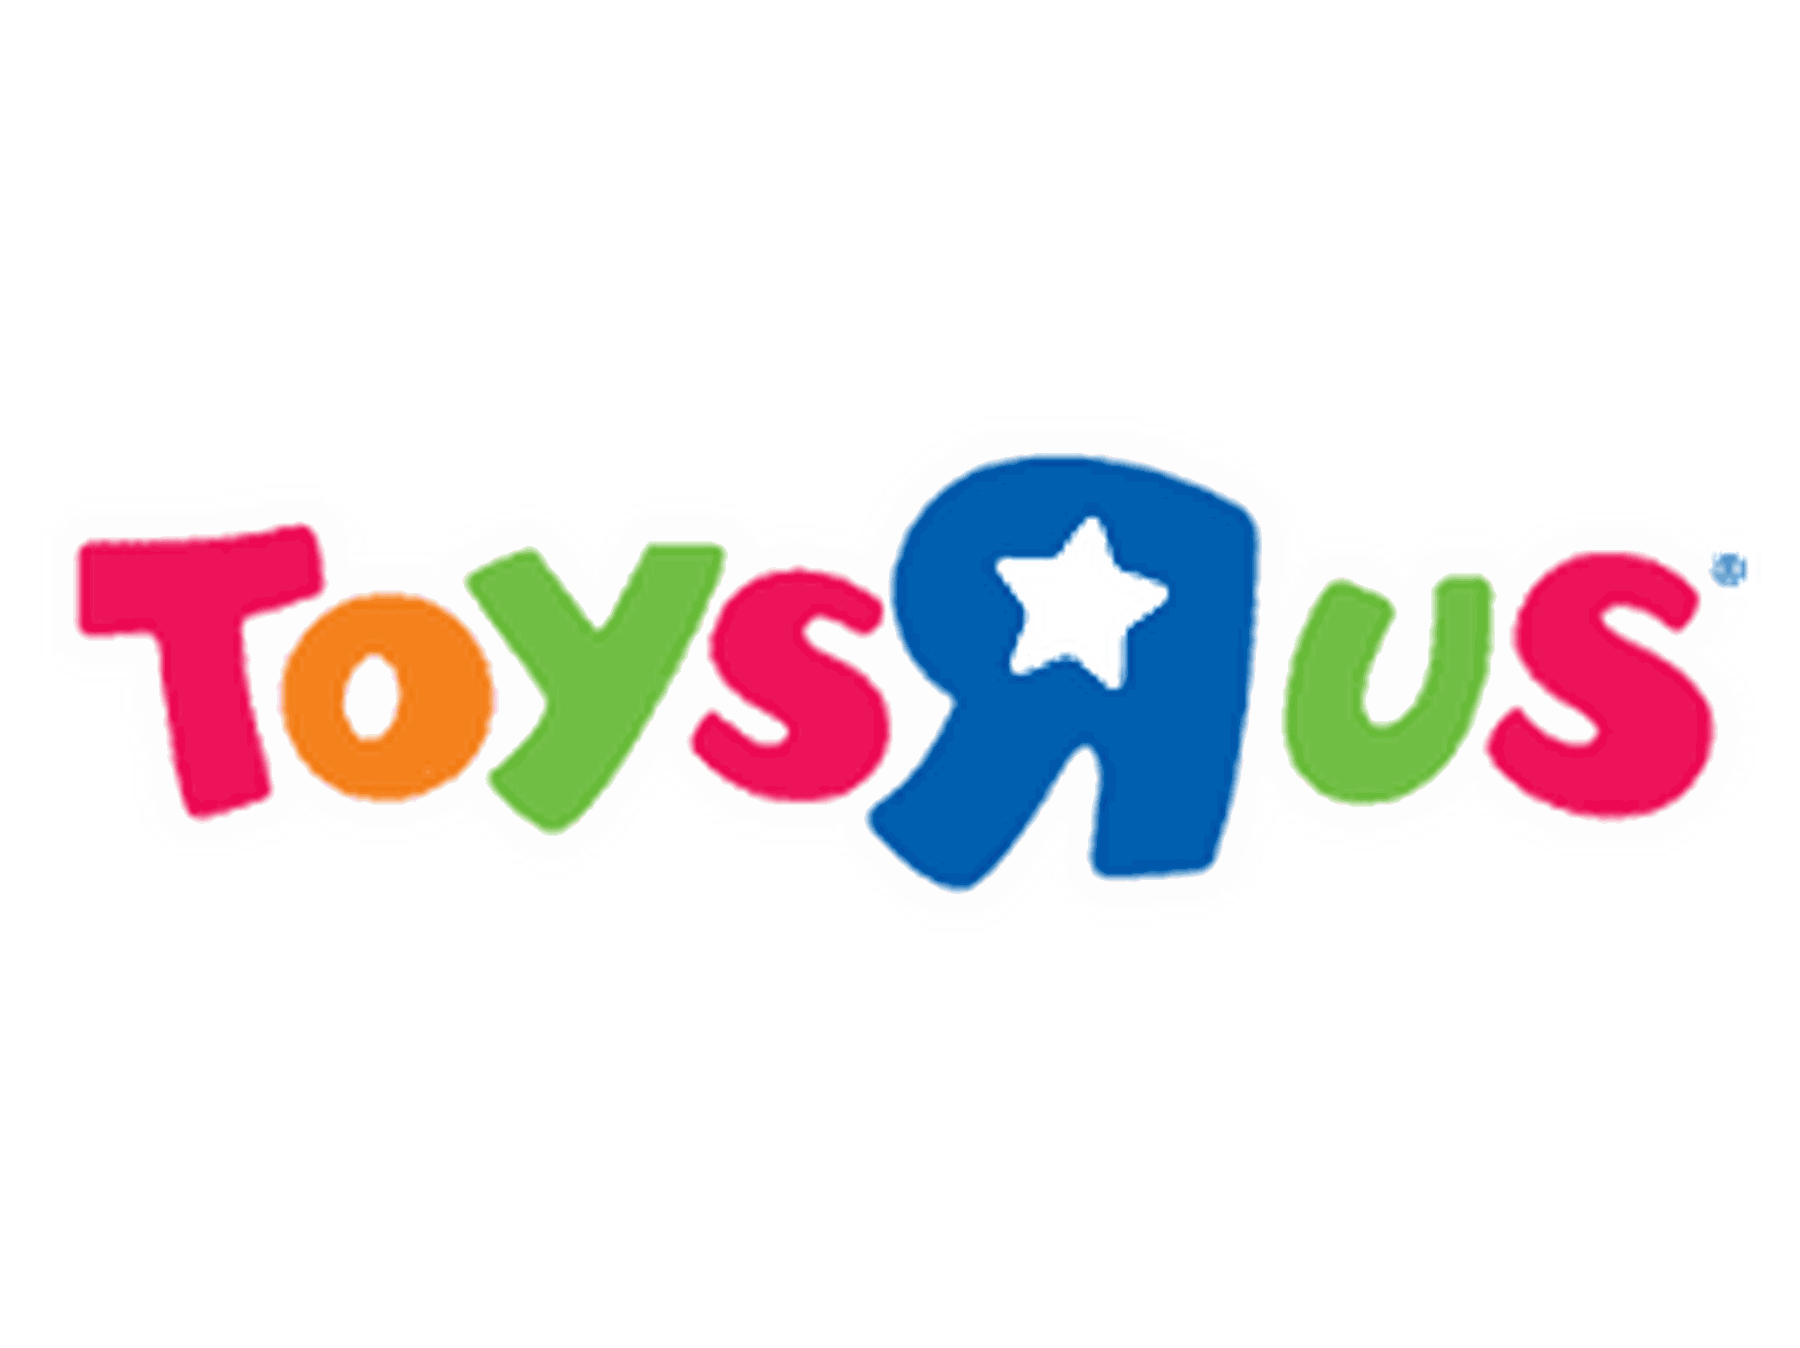 Toys"R"Us Promo Code